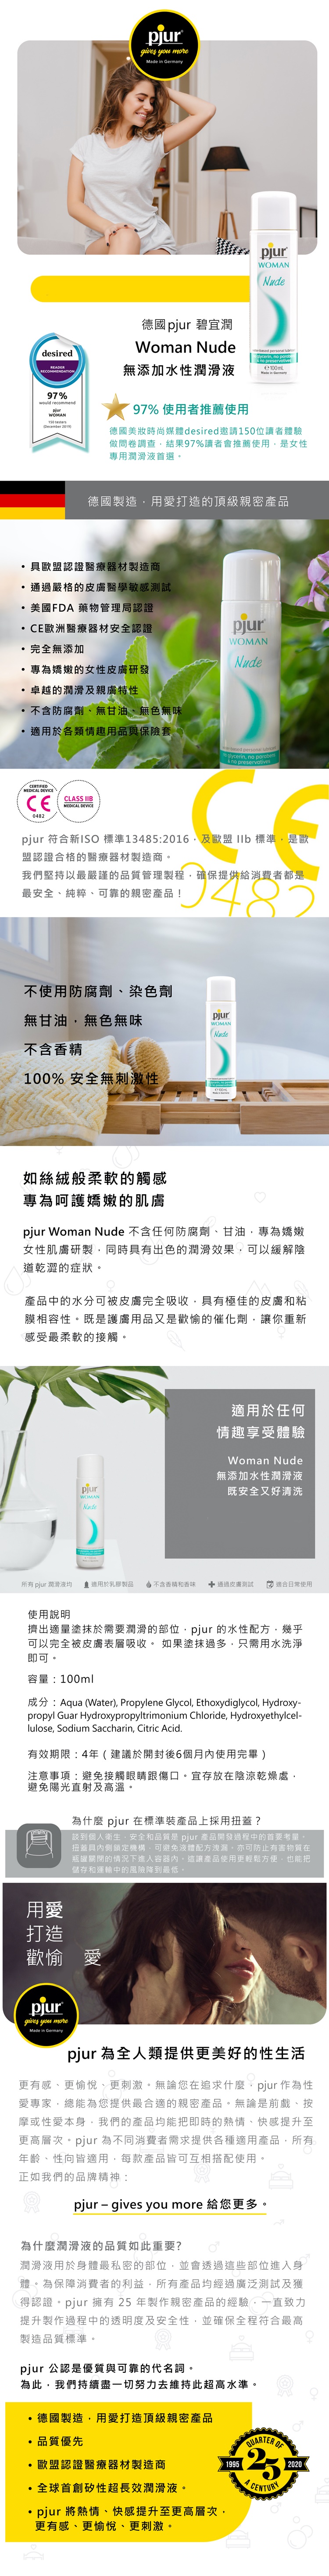 Pjur Woman Nude Water-based Lubricant 100ml - Adult Loving